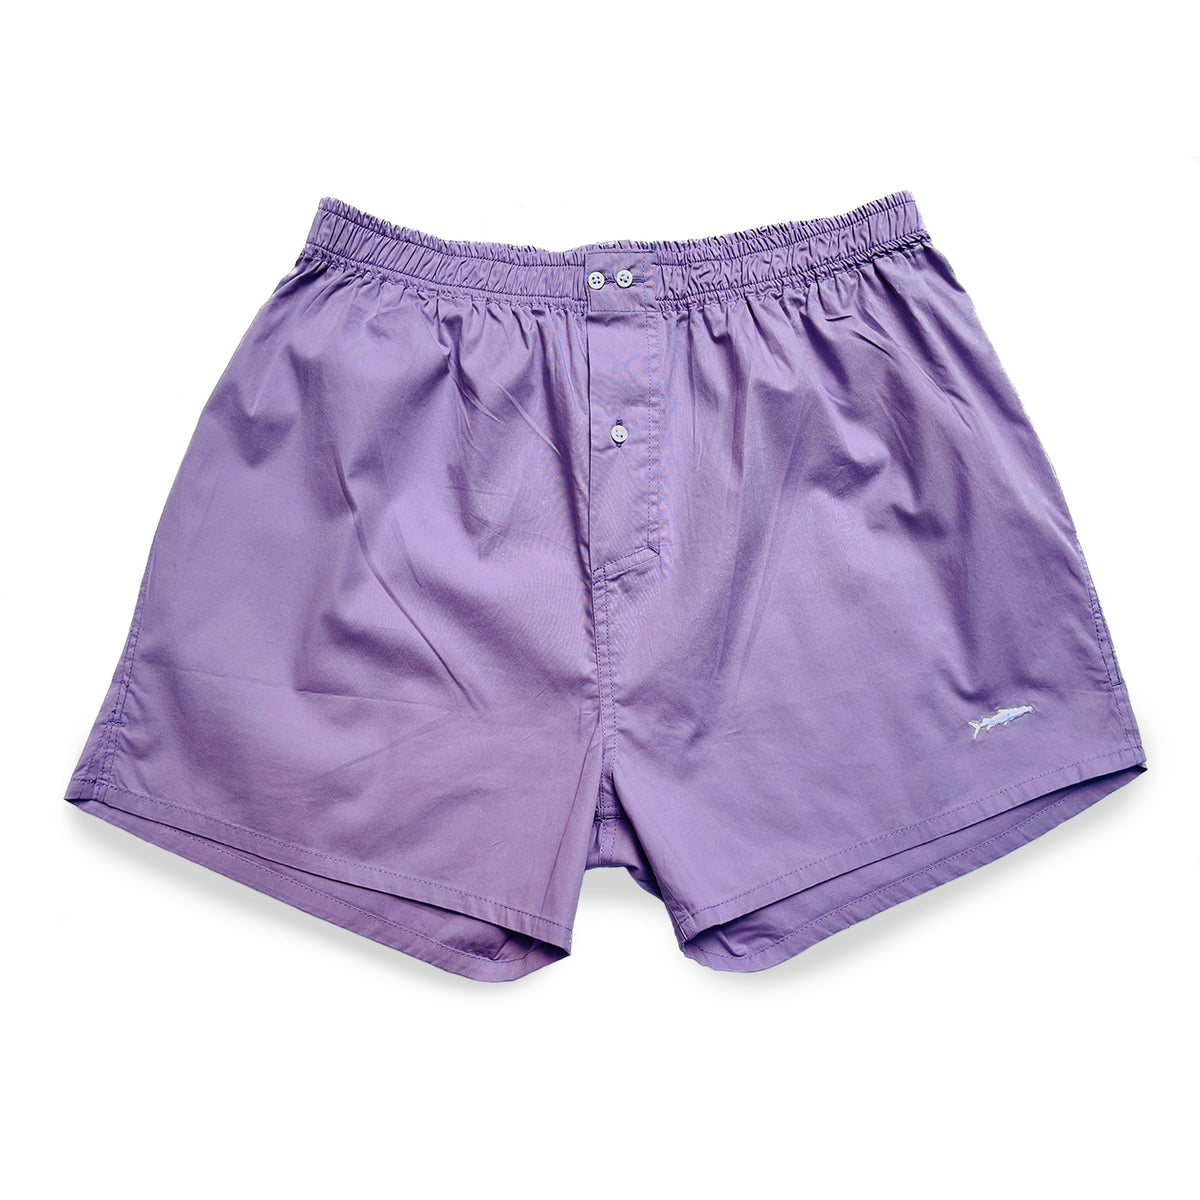 Urban Scottish Men's Relaxed Purple Printed Boxer Shorts - Urban